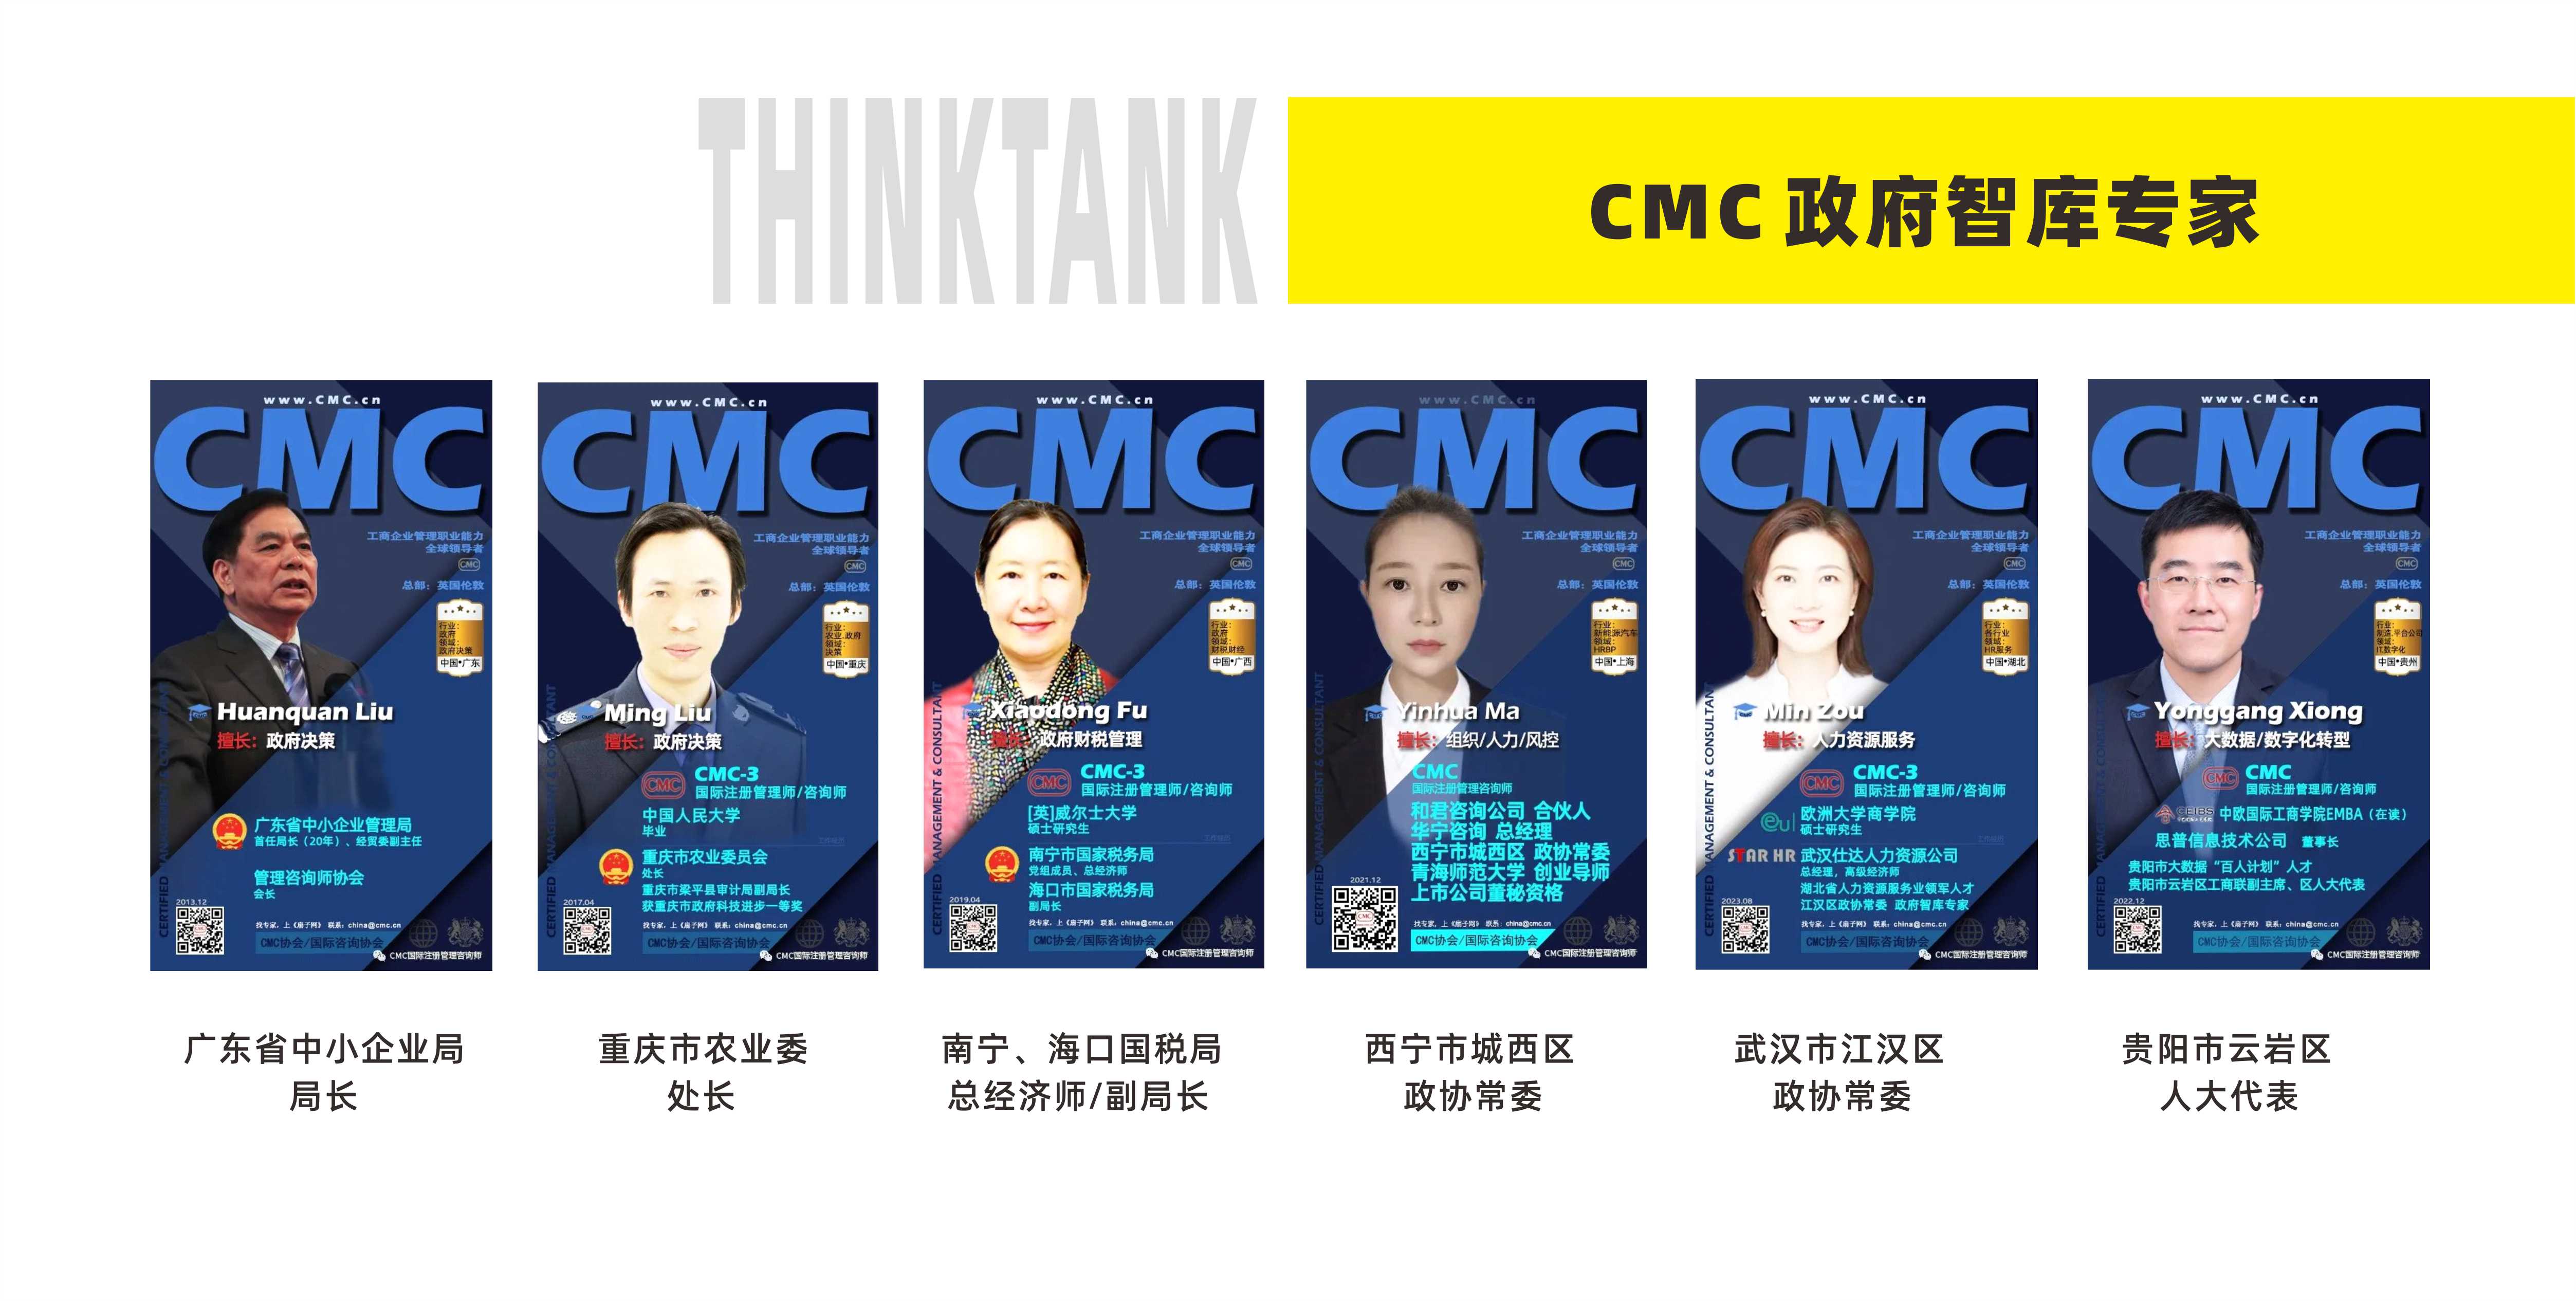 CMC国际注册管理师招生简介15-16